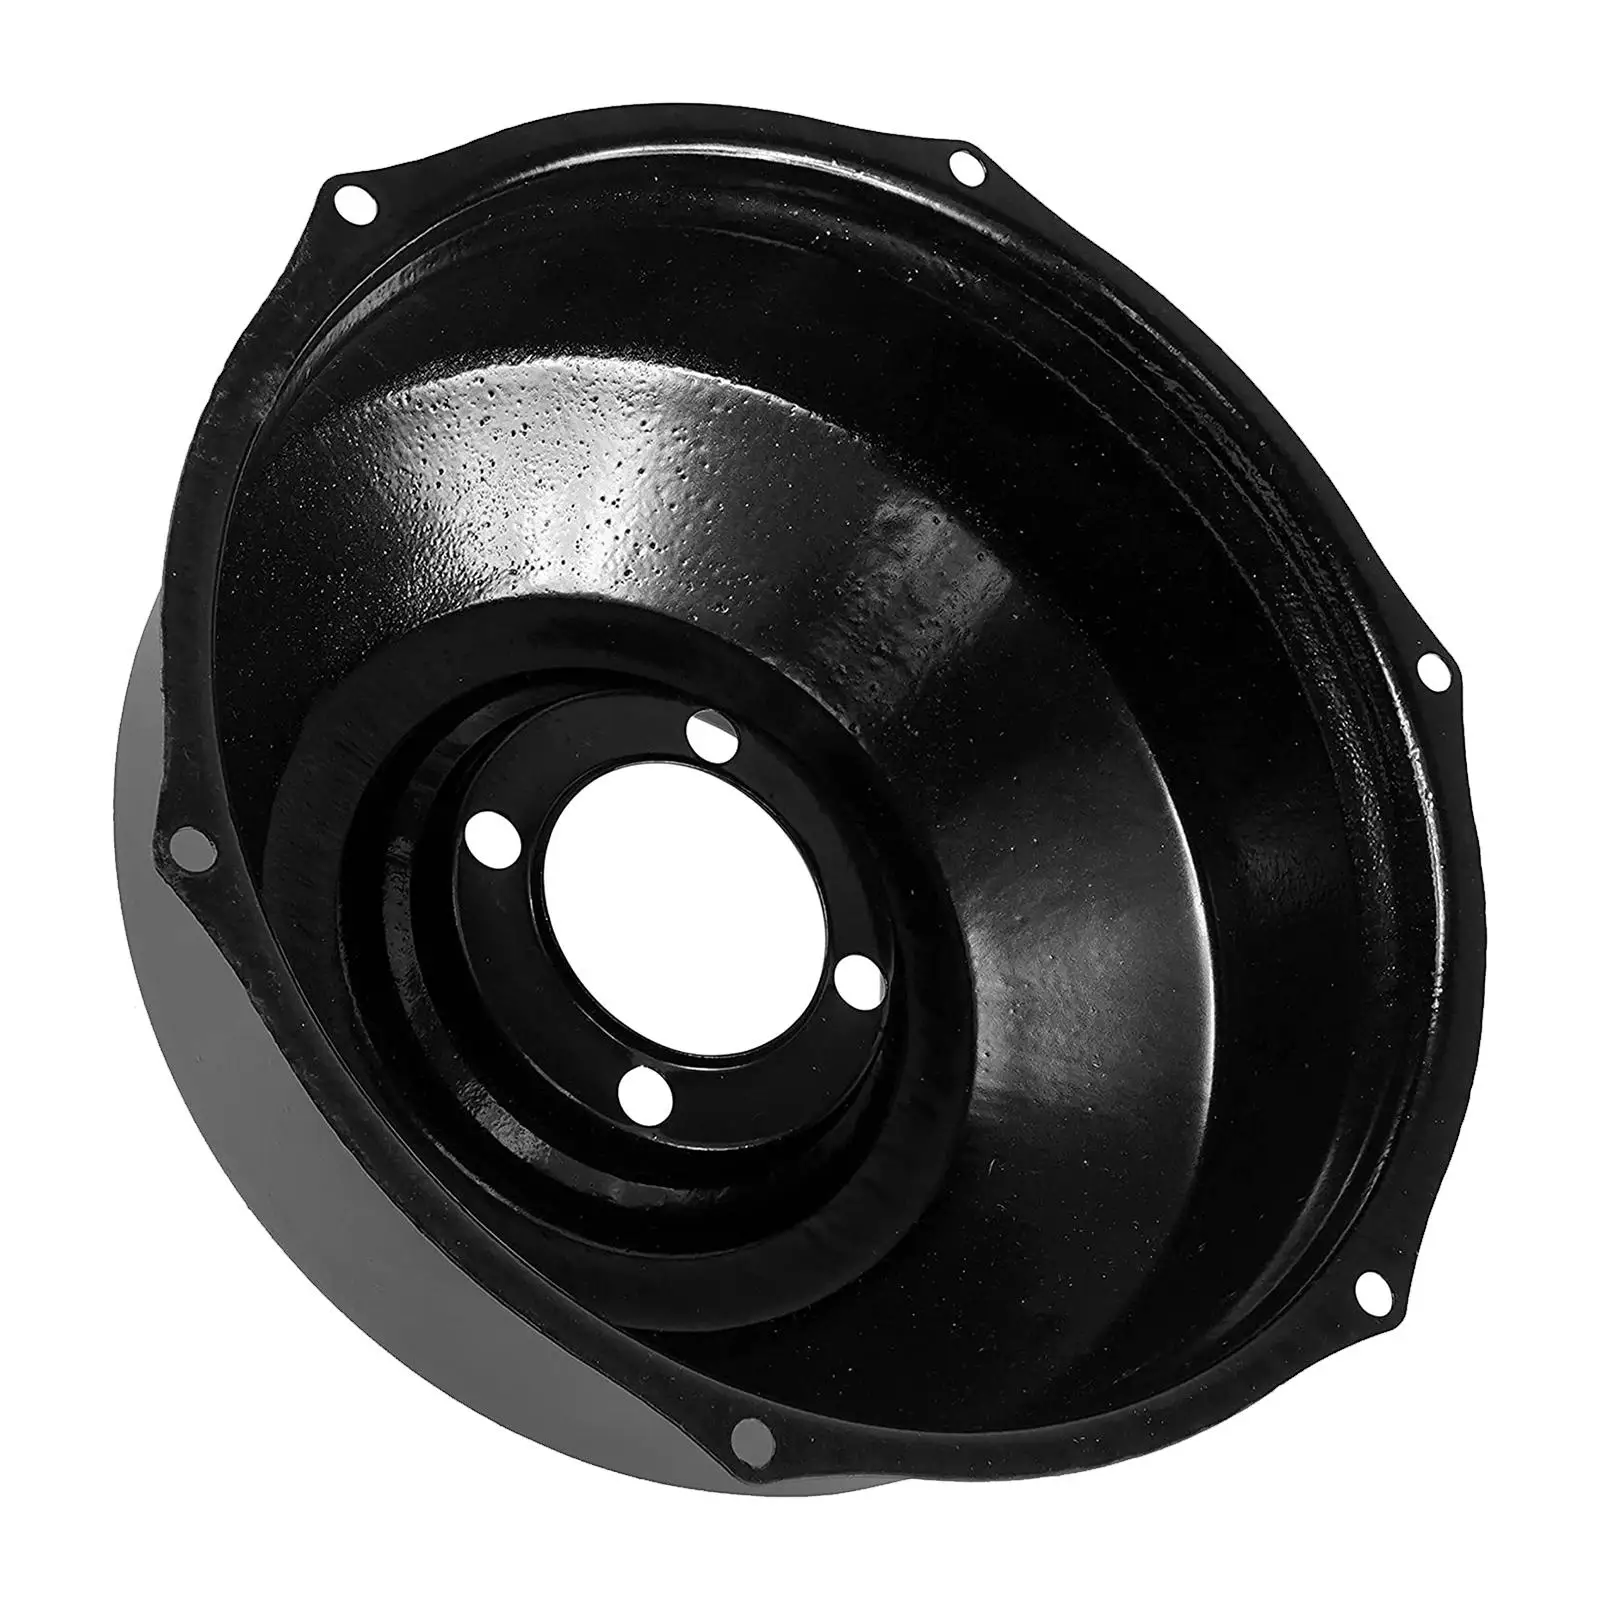 Rear Brake Drum Cover 40520-Hm5-930 Fits for  TRX300 4x4 2x4 Black